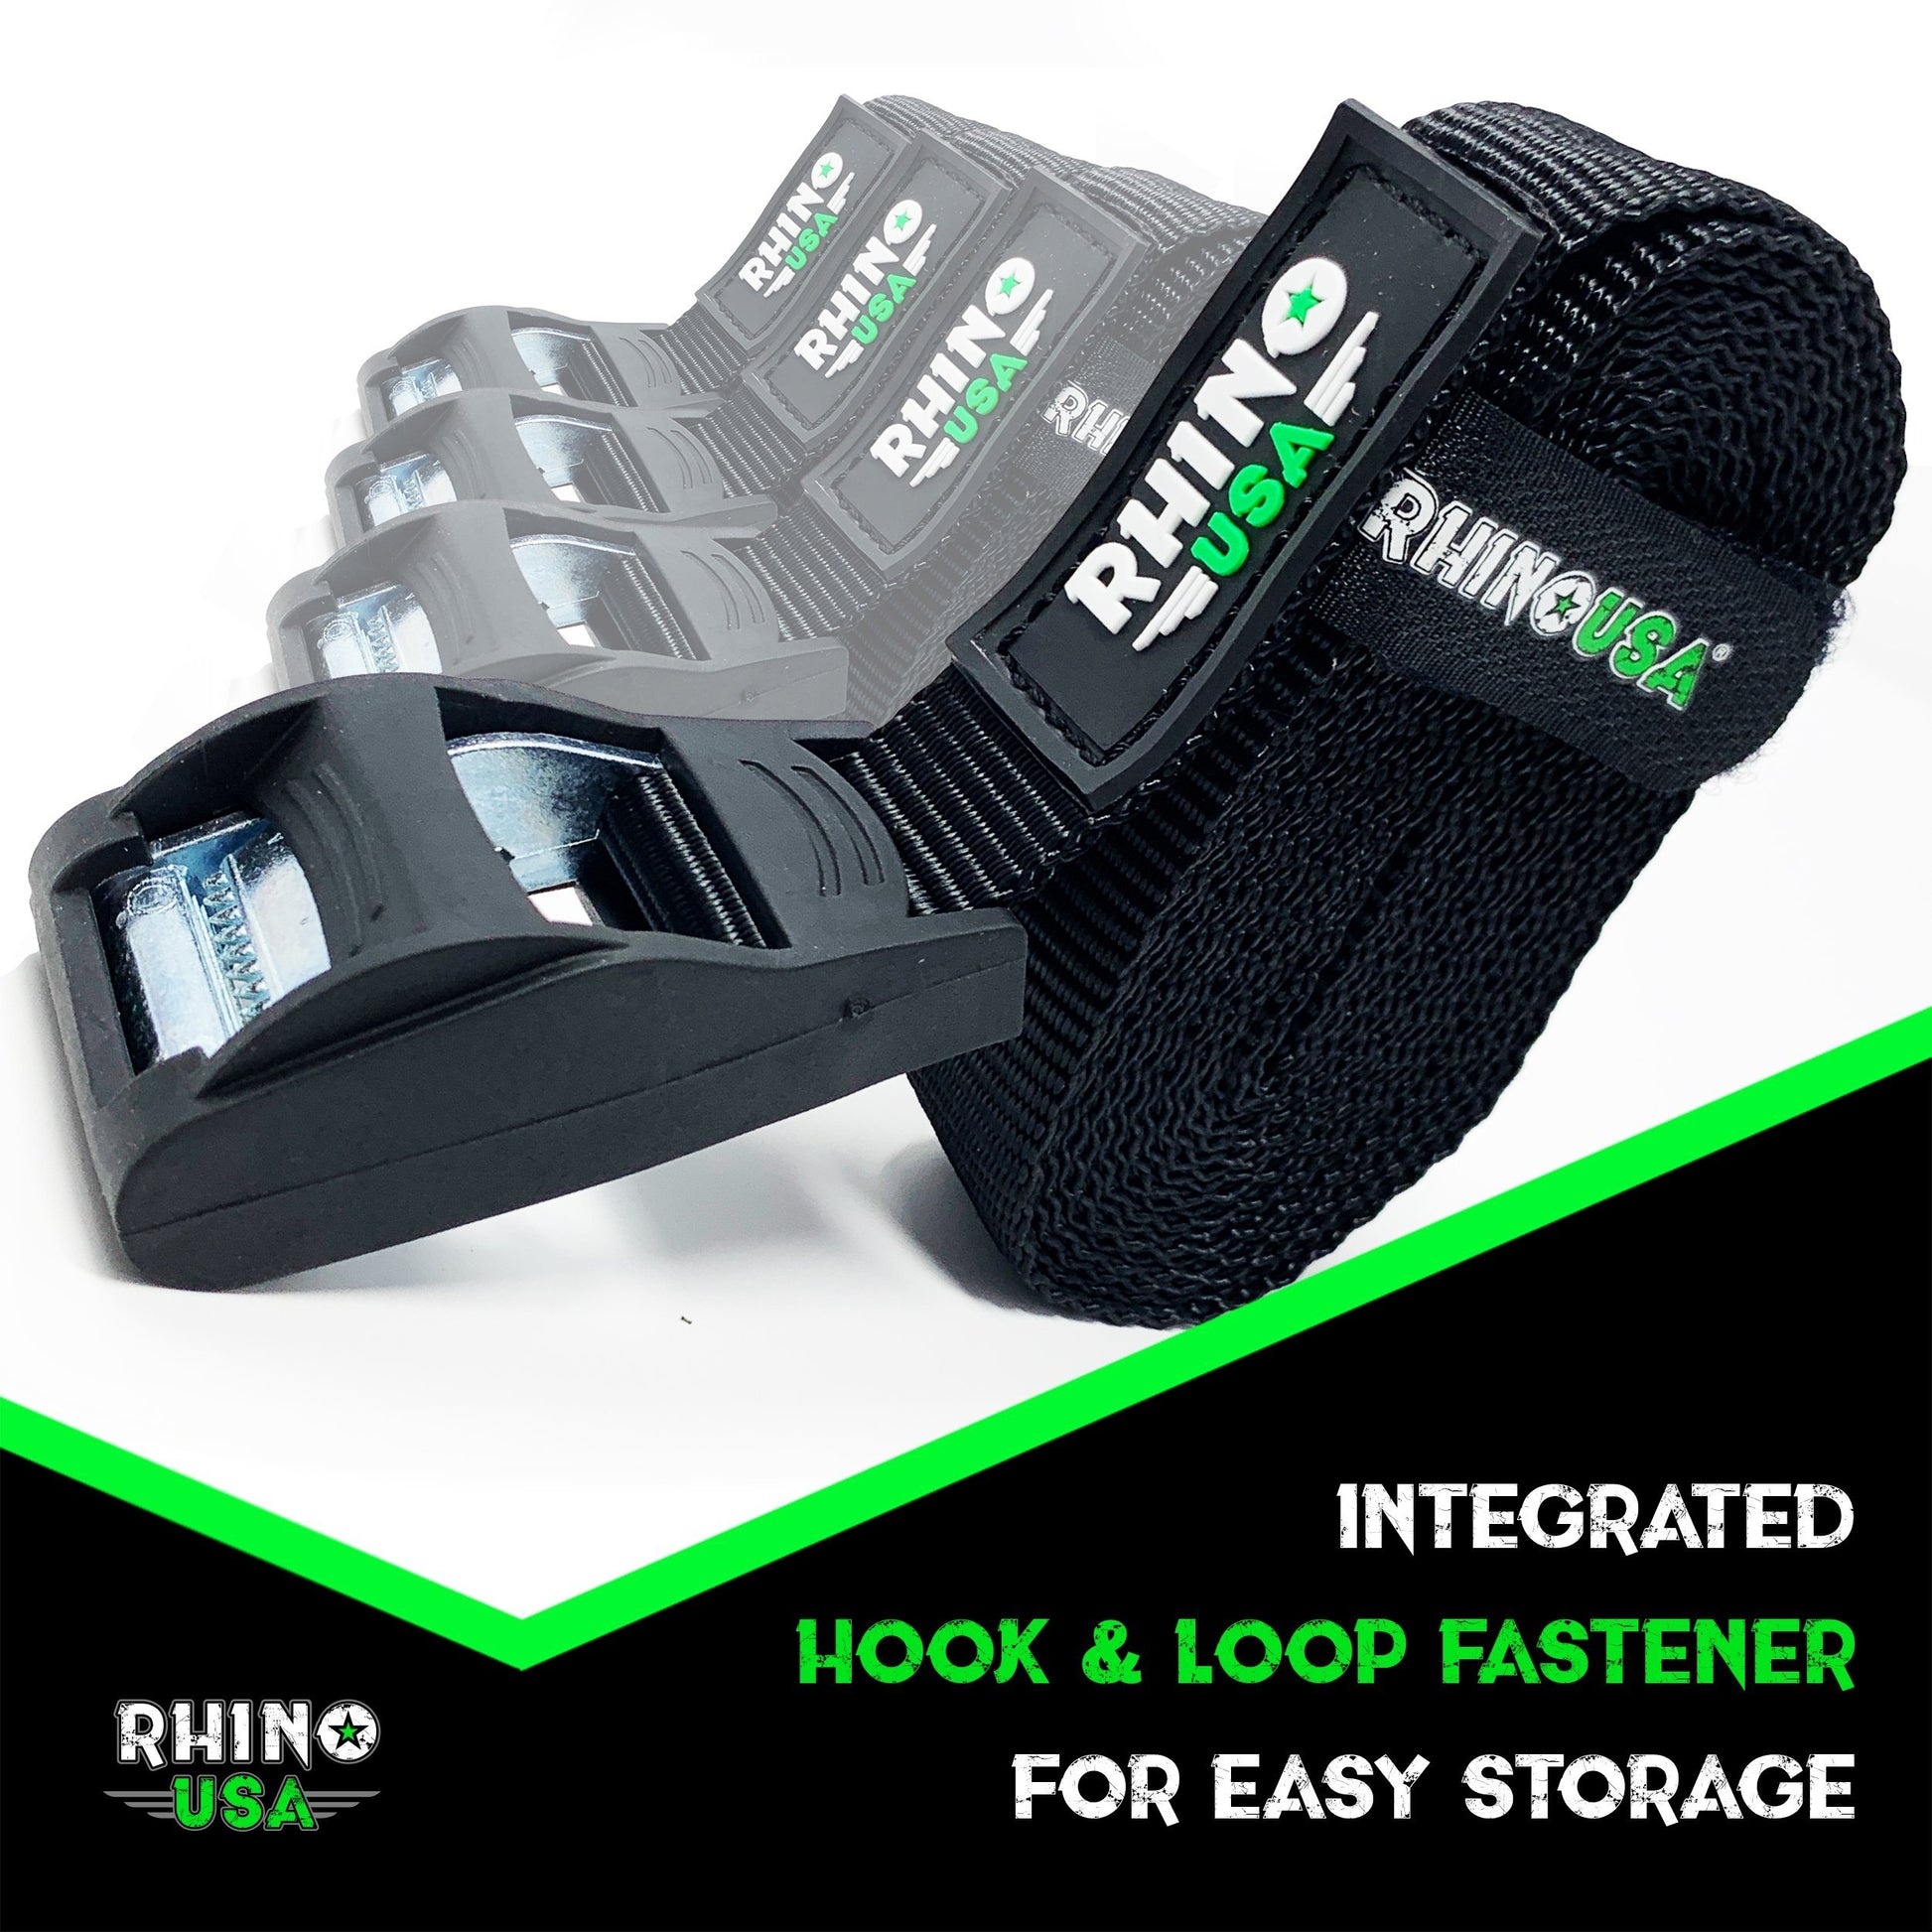 Rhino USA Cambuckle Tie-Down Straps (2-Pack)